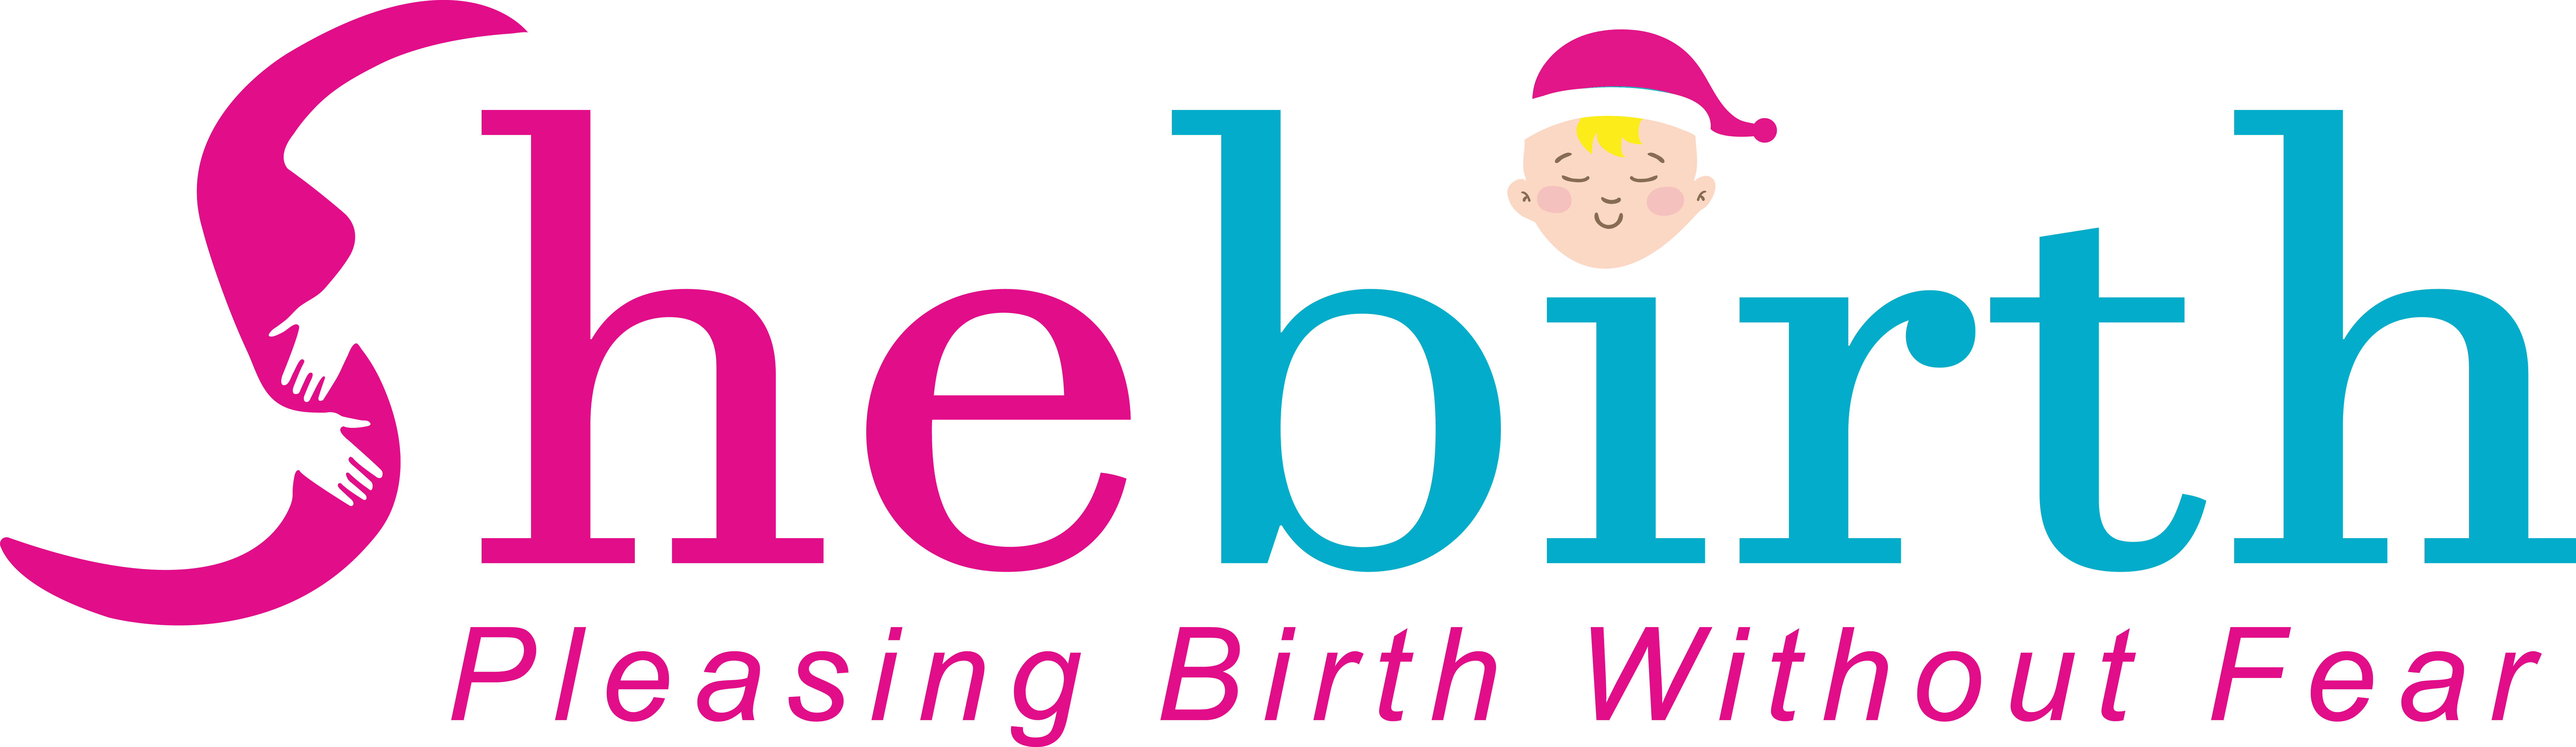 Shebirth-Final-Logo-new